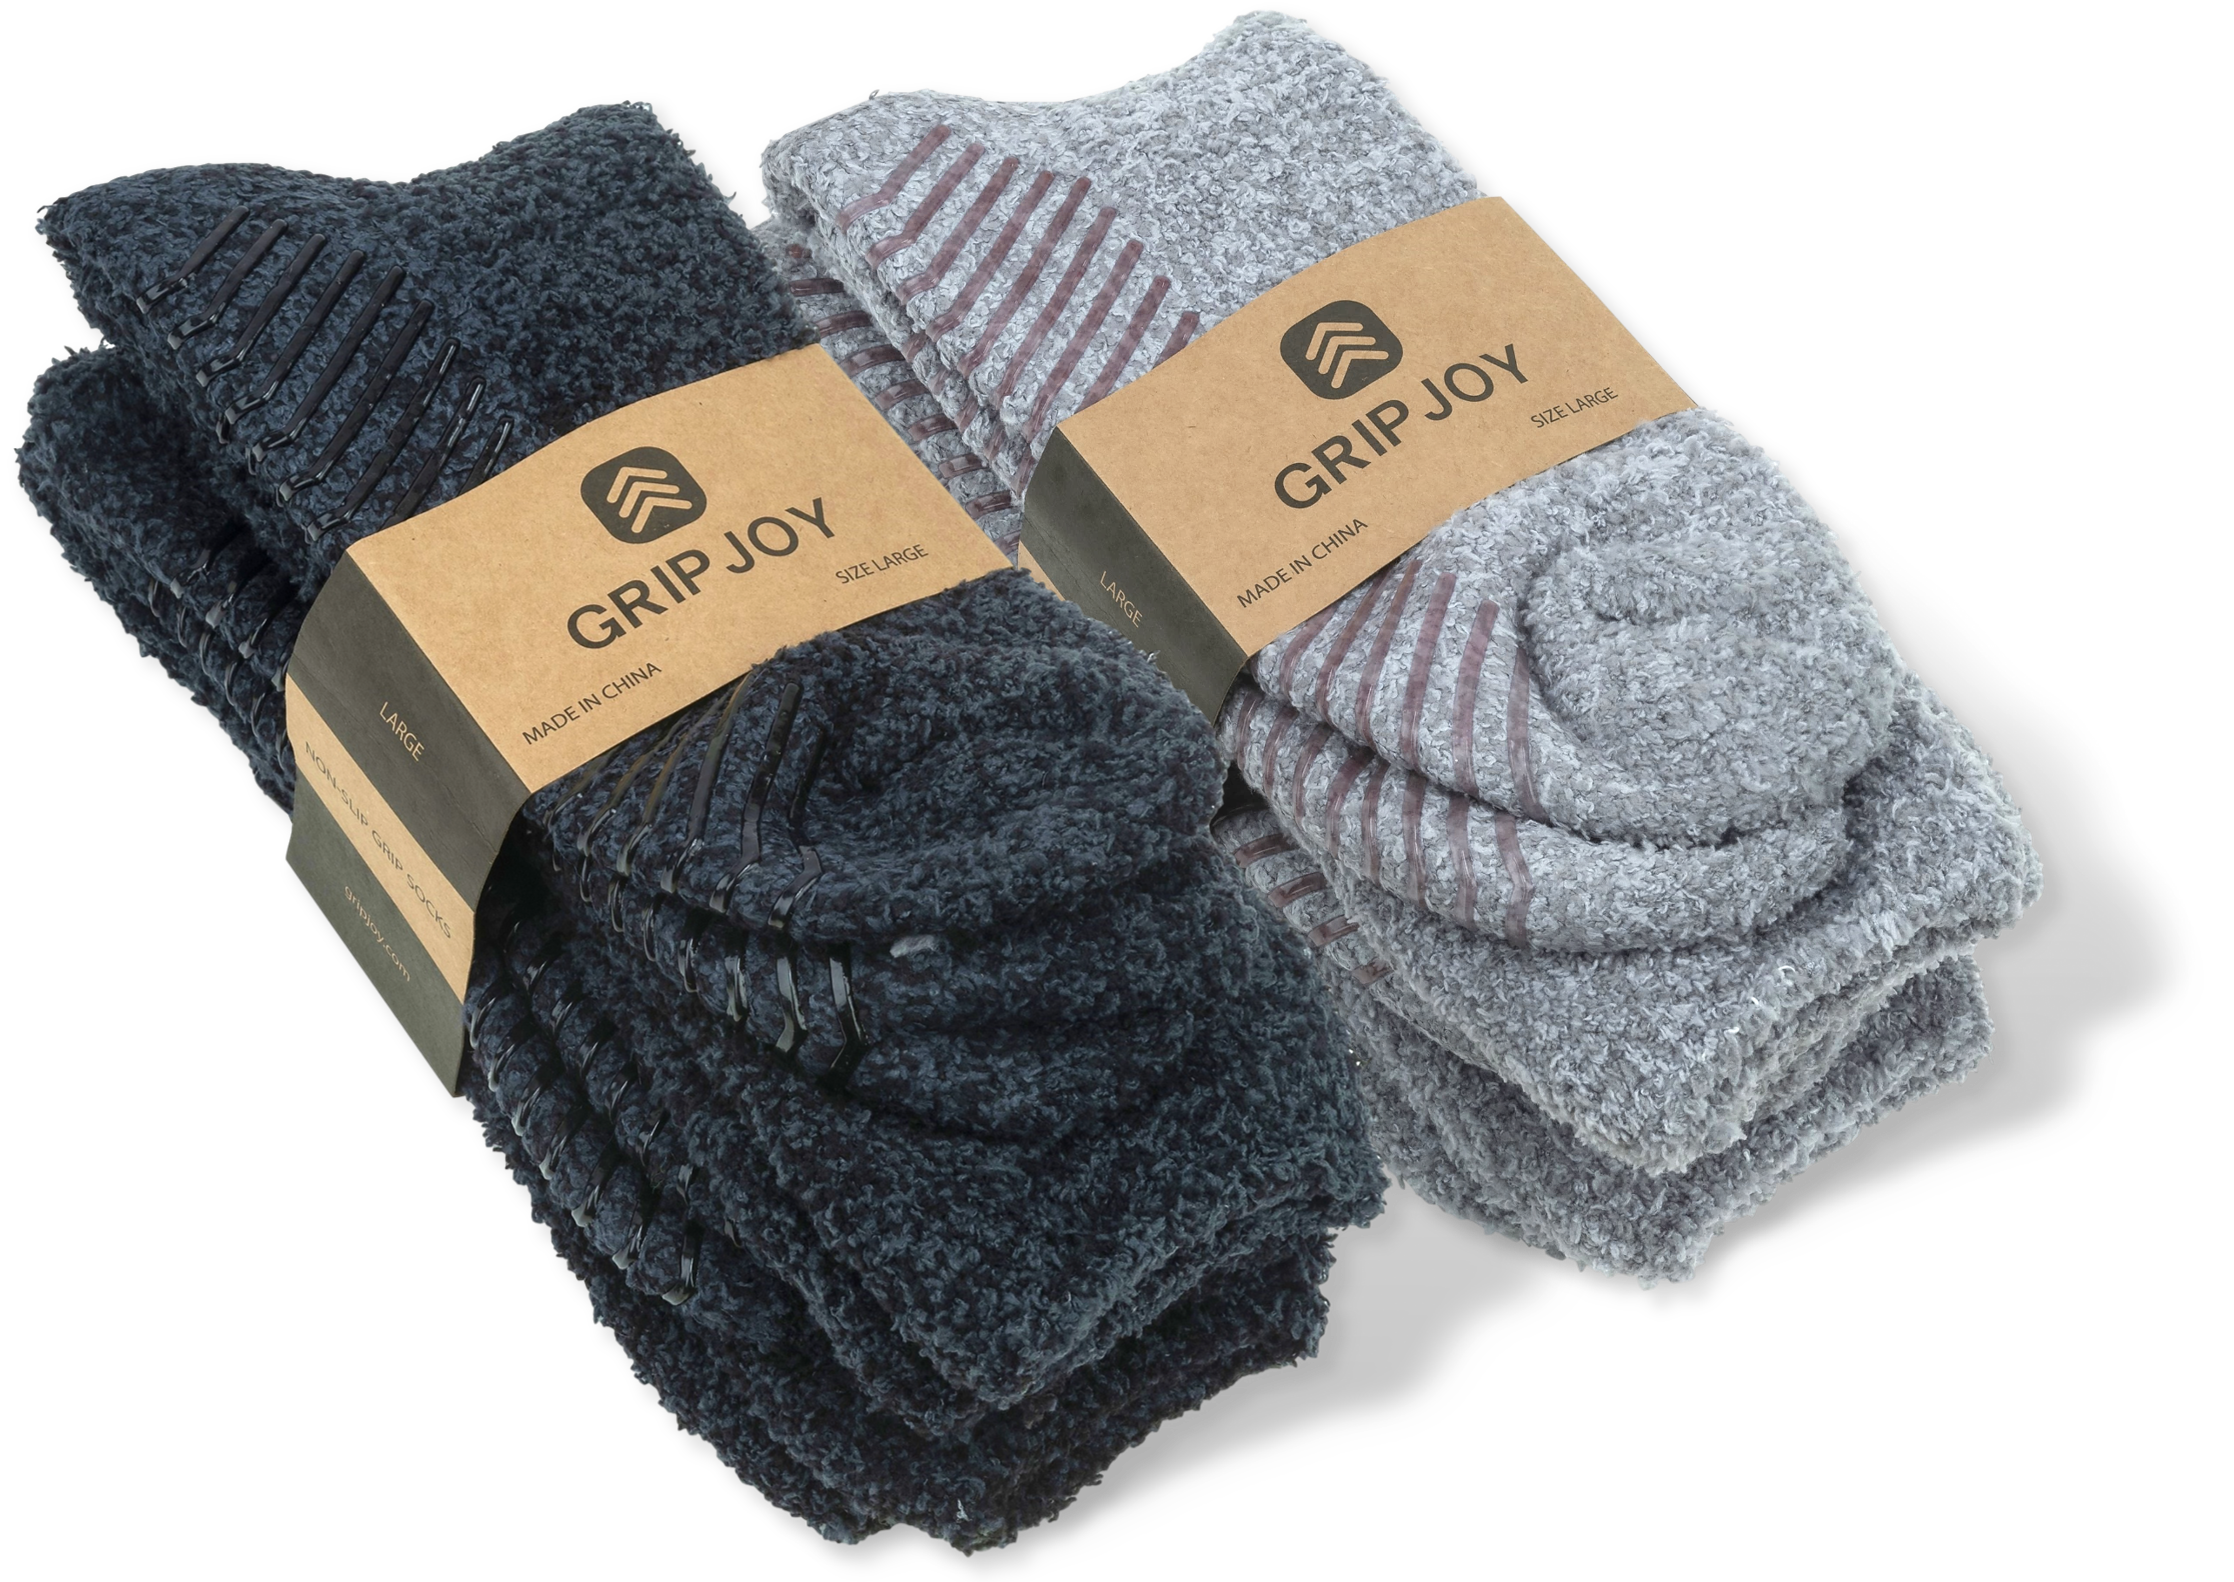 Men's Soft Fuzzy Furry Gripper Slipper Socks - Buffalo Plaid - S/M - 1 Pair